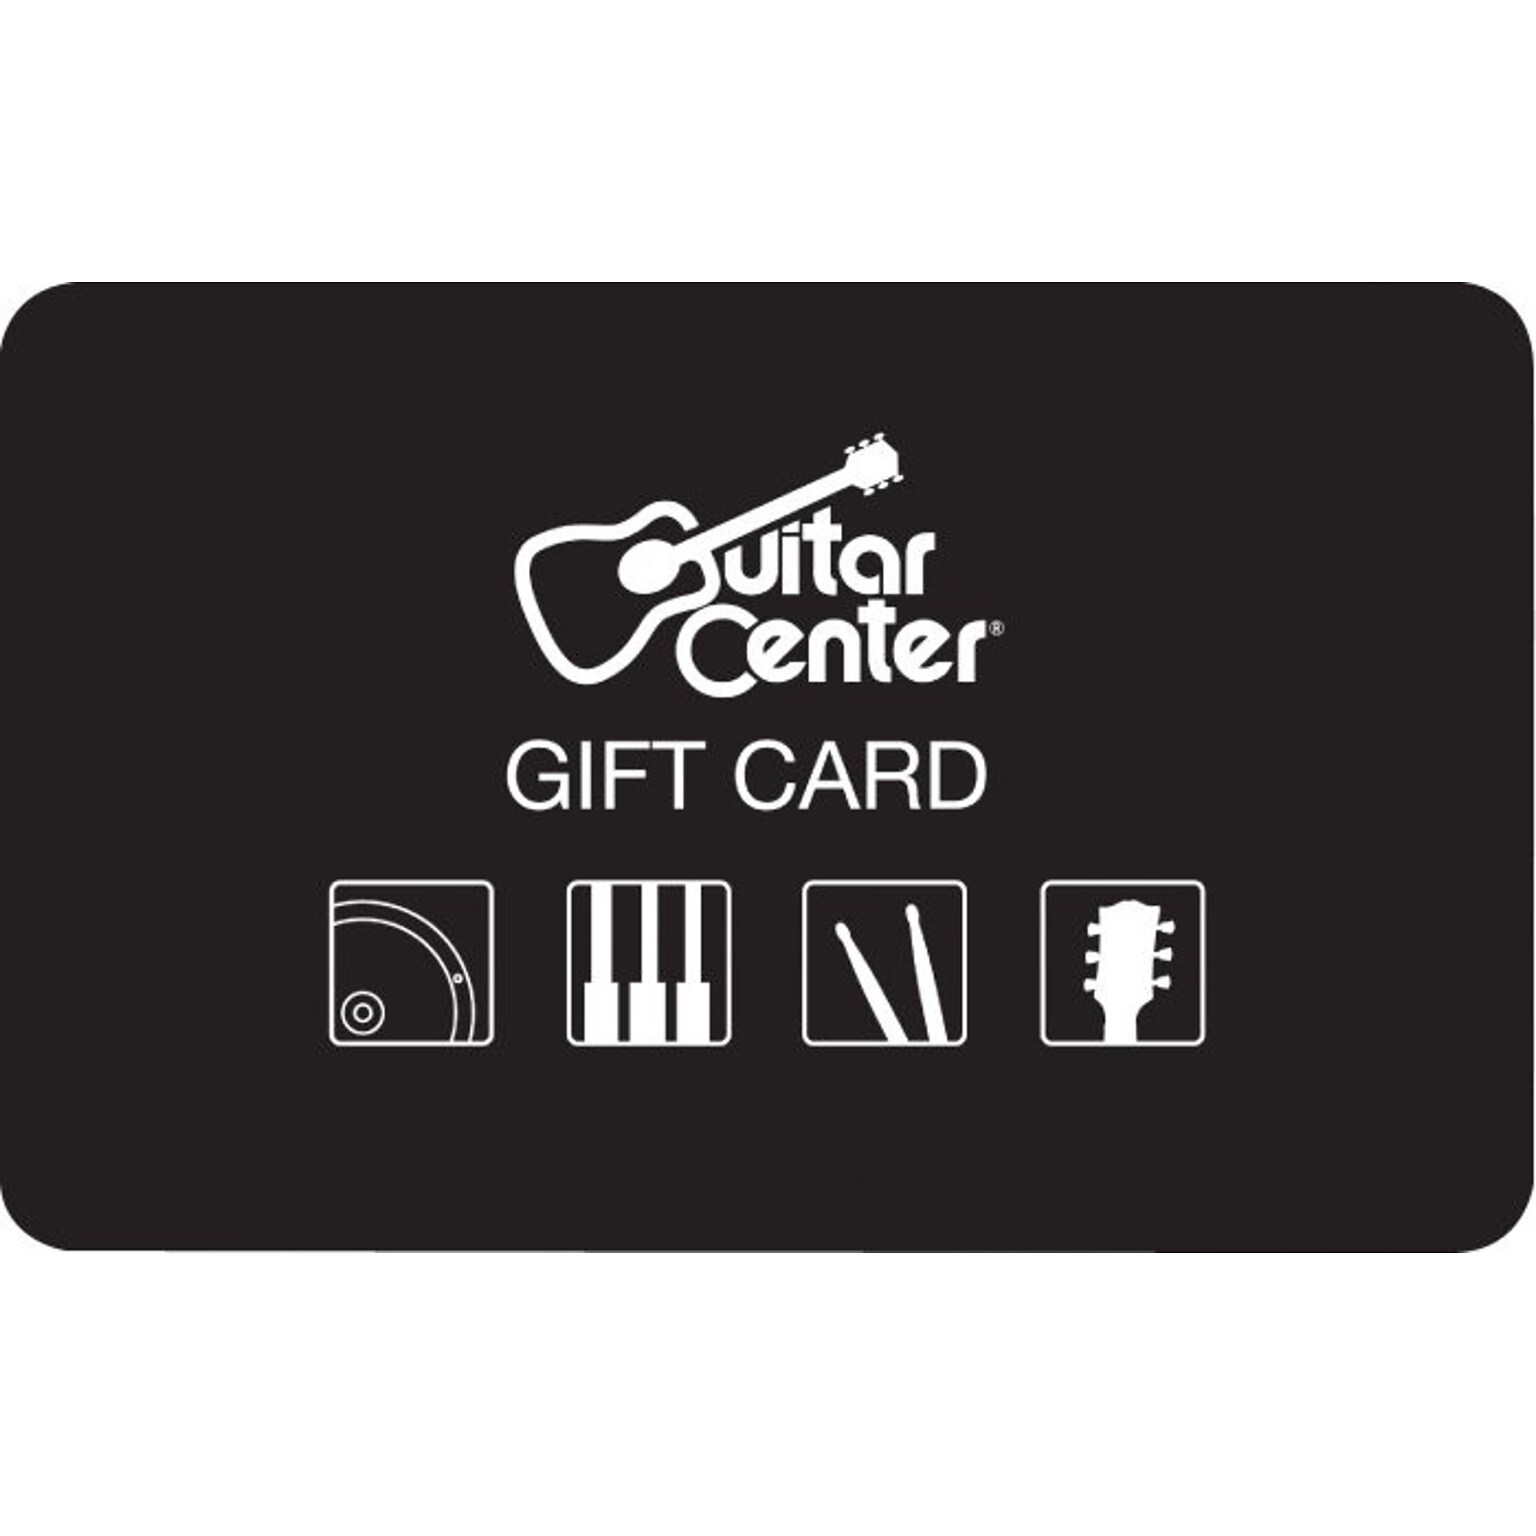 Guitar Center Gift Card $100